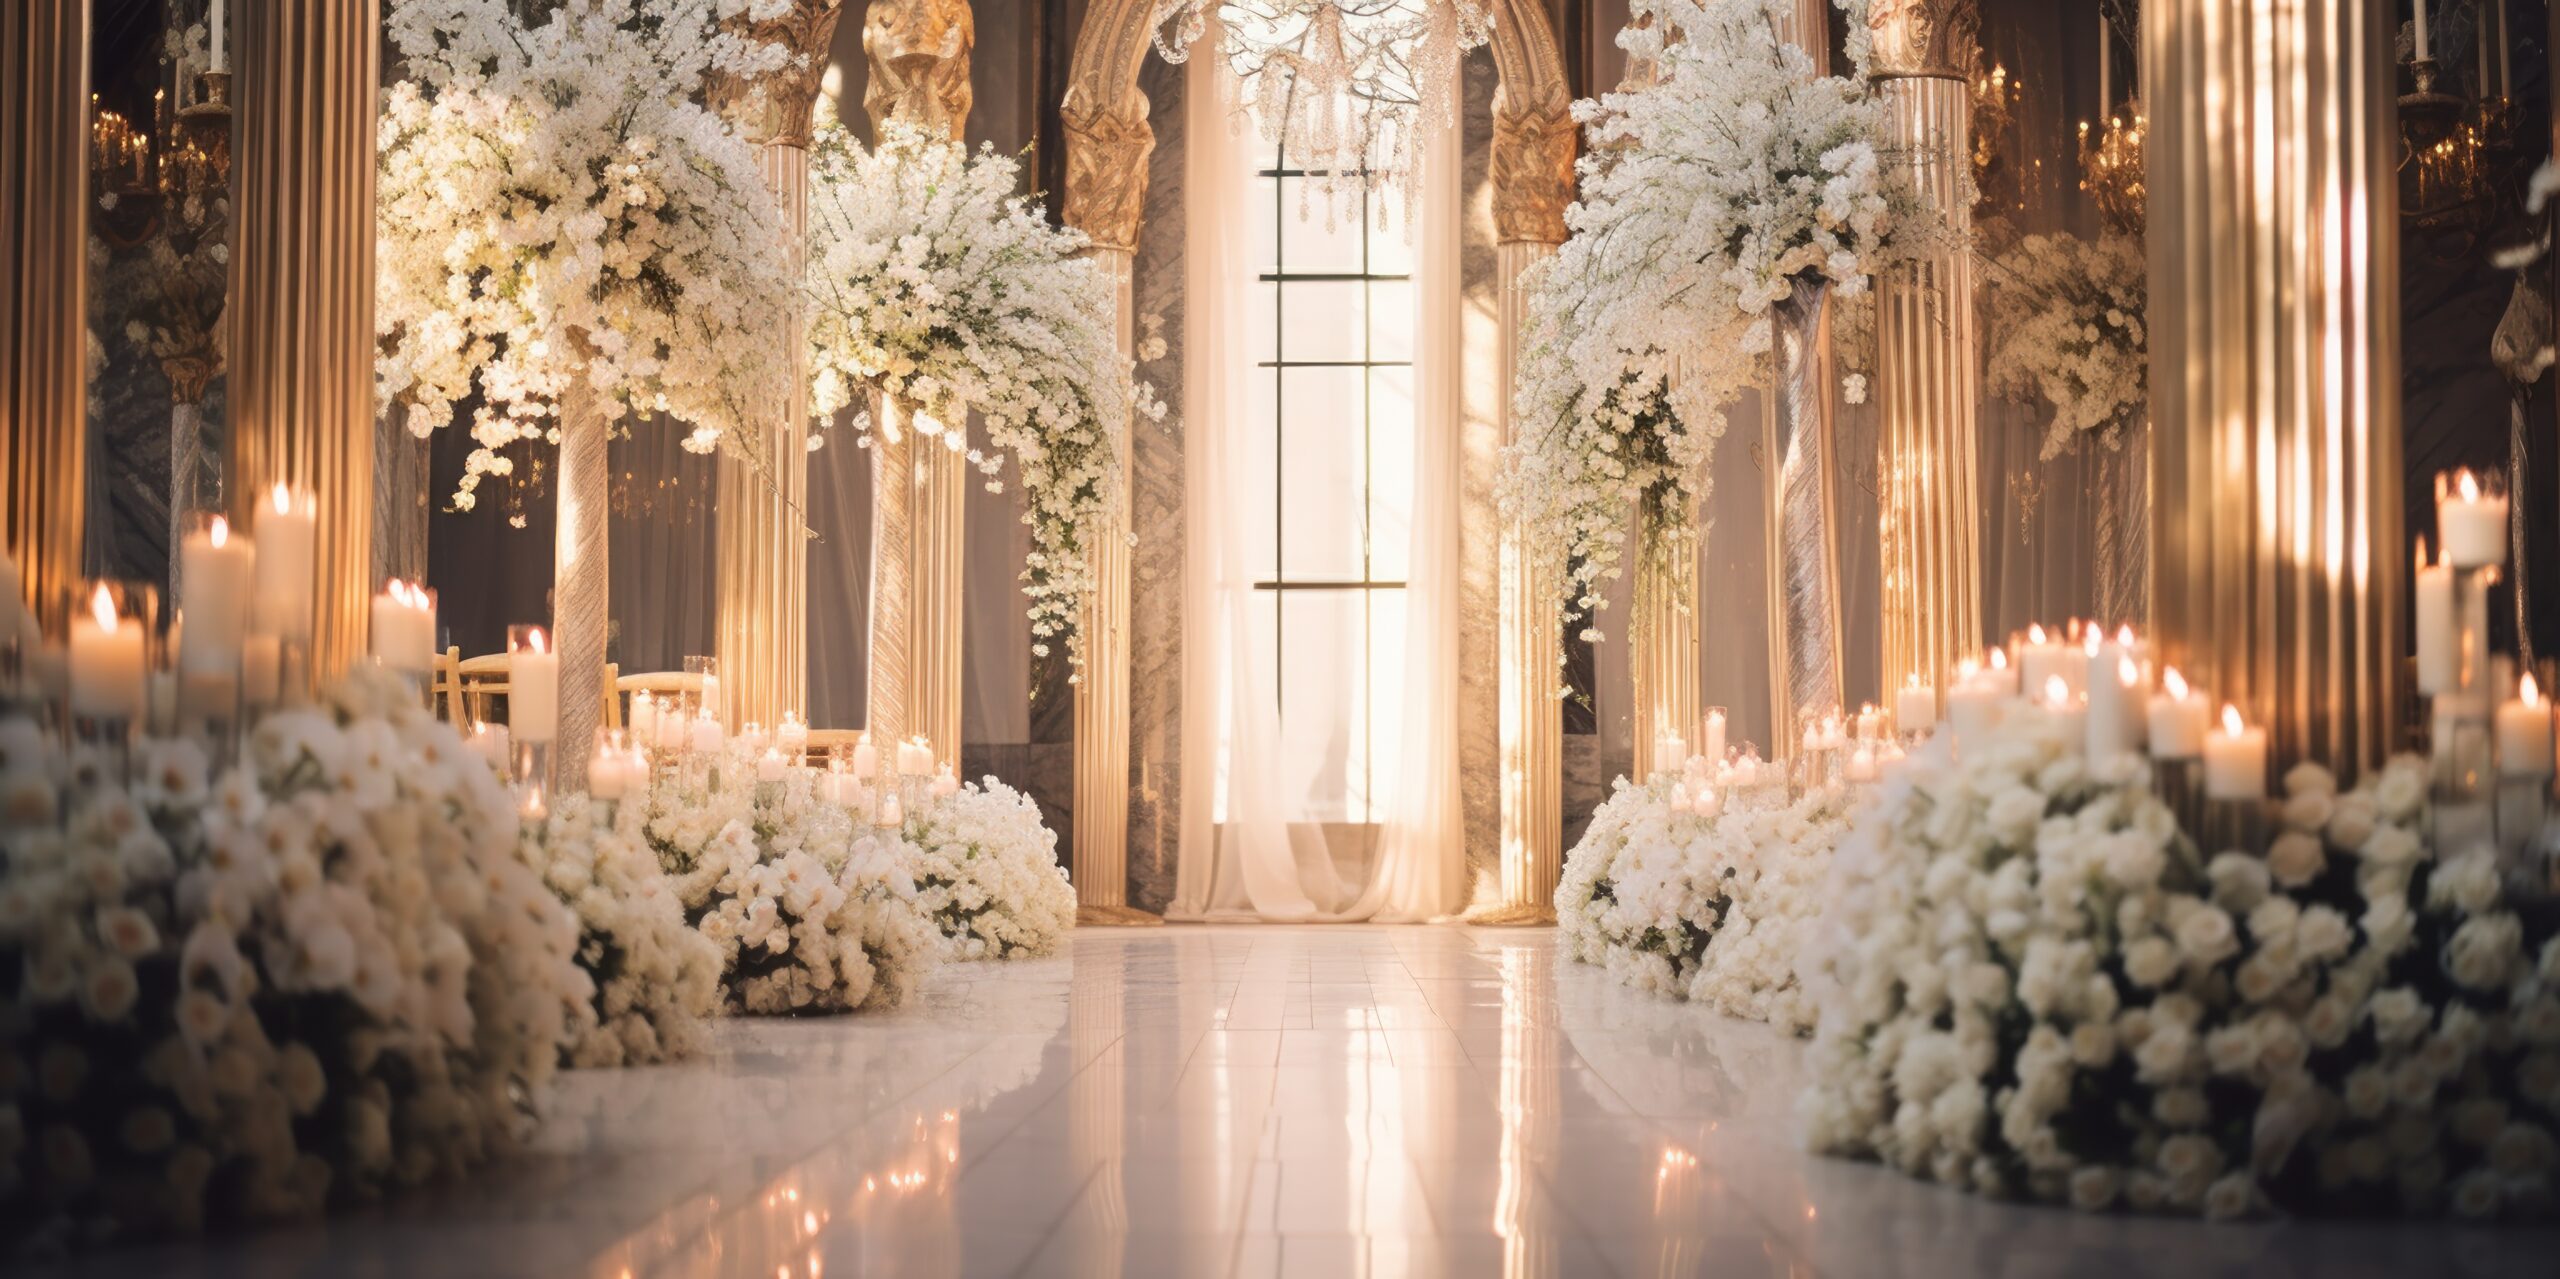 Wedding aisle shining with light among flowers.